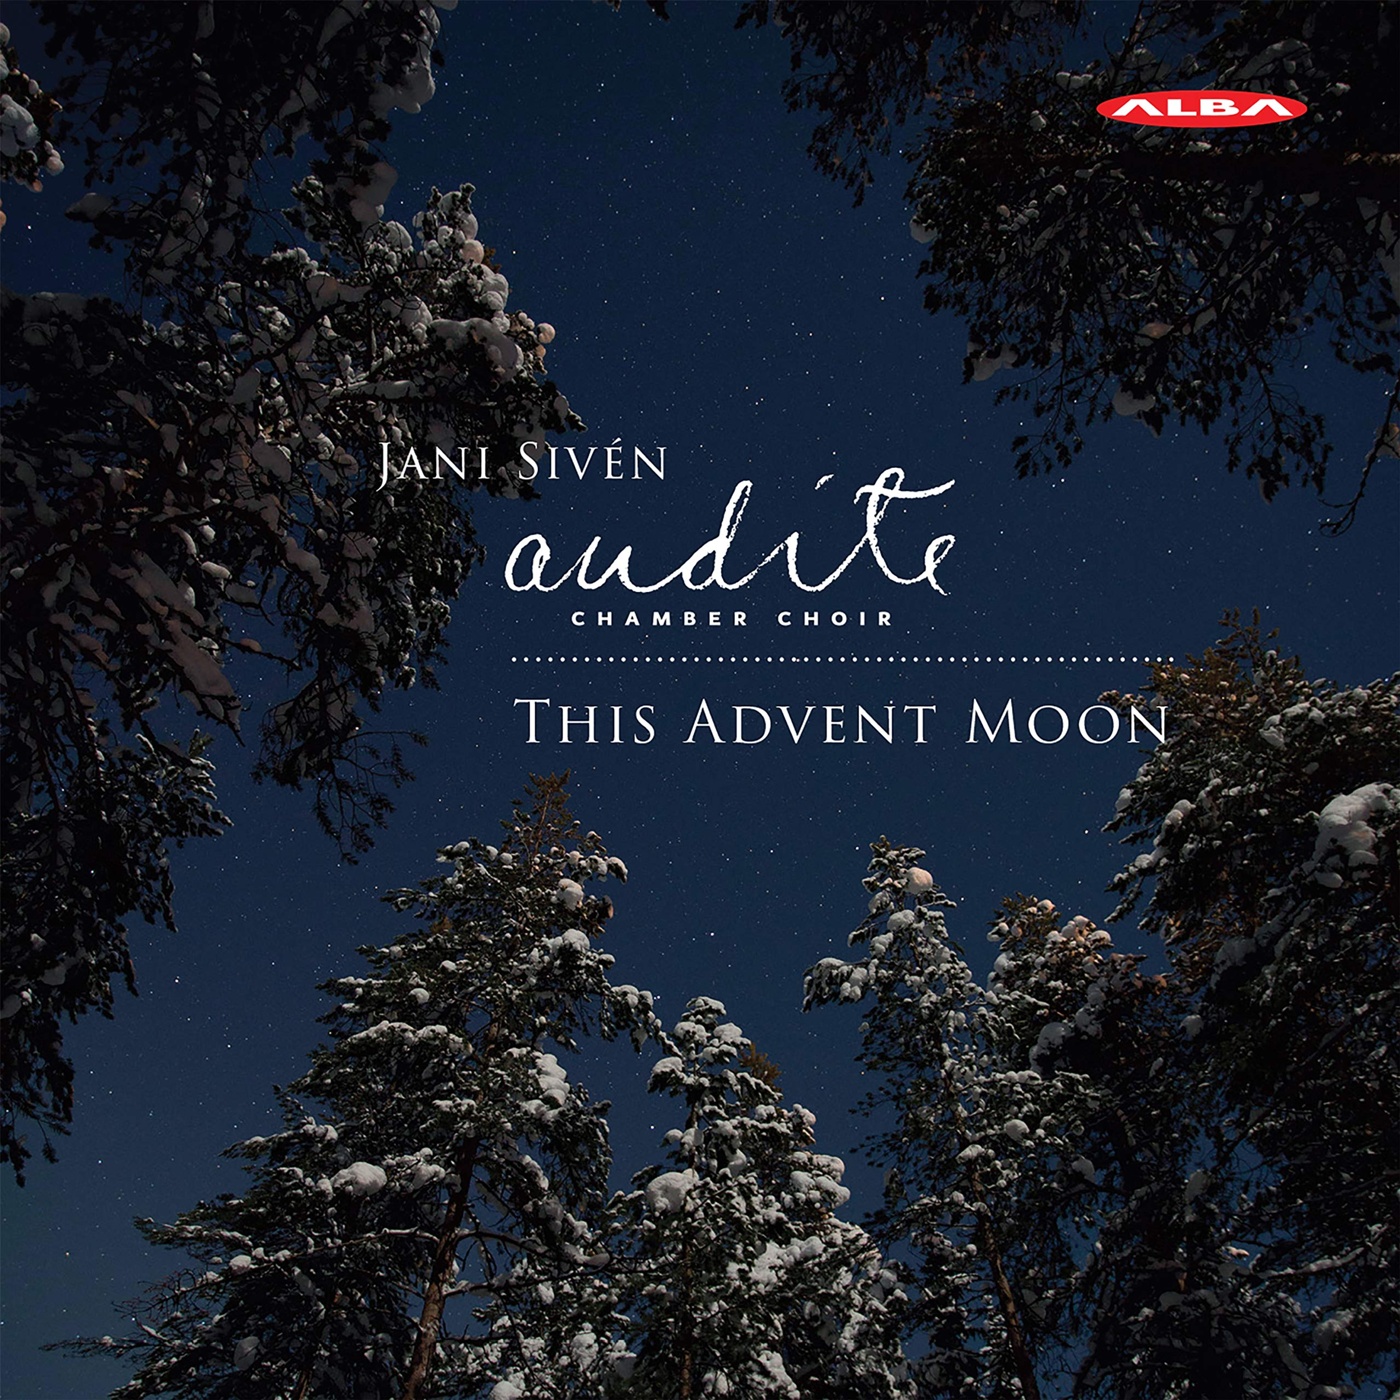 Thousand Winters. Moon Adventure. Adventure moon